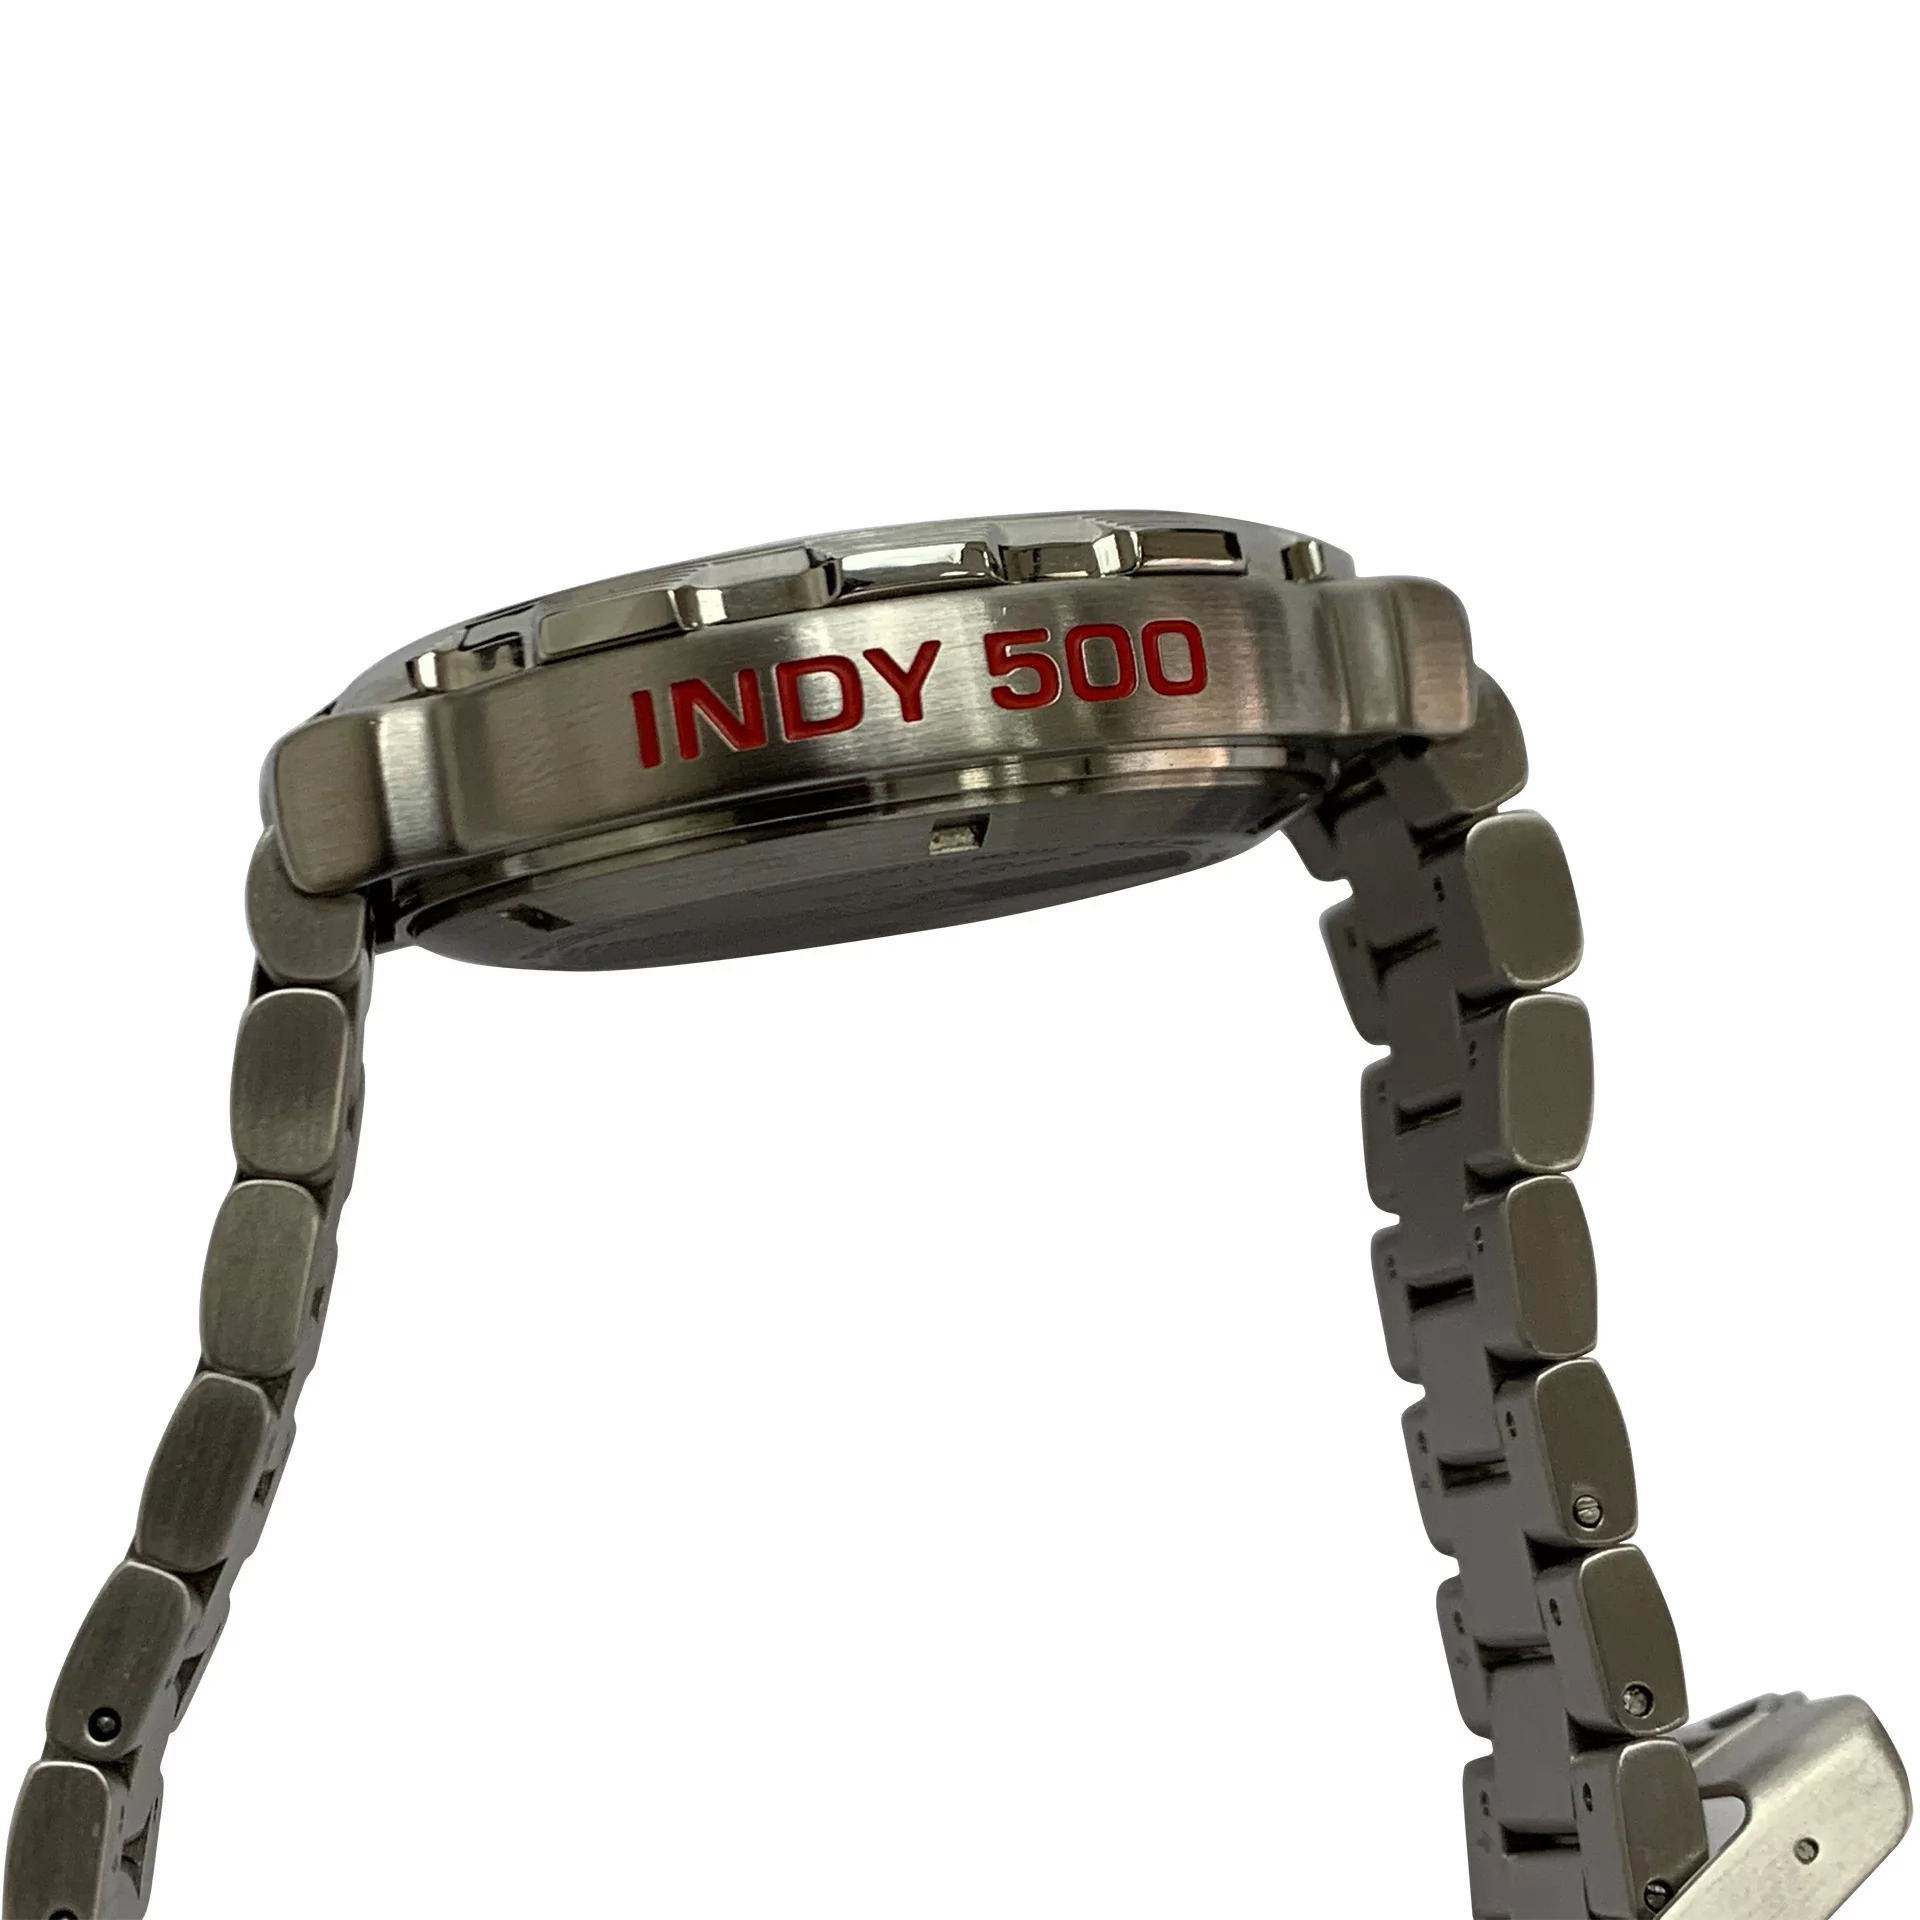 Relógio Tag Heuer Fórmula 1 - Indy 500